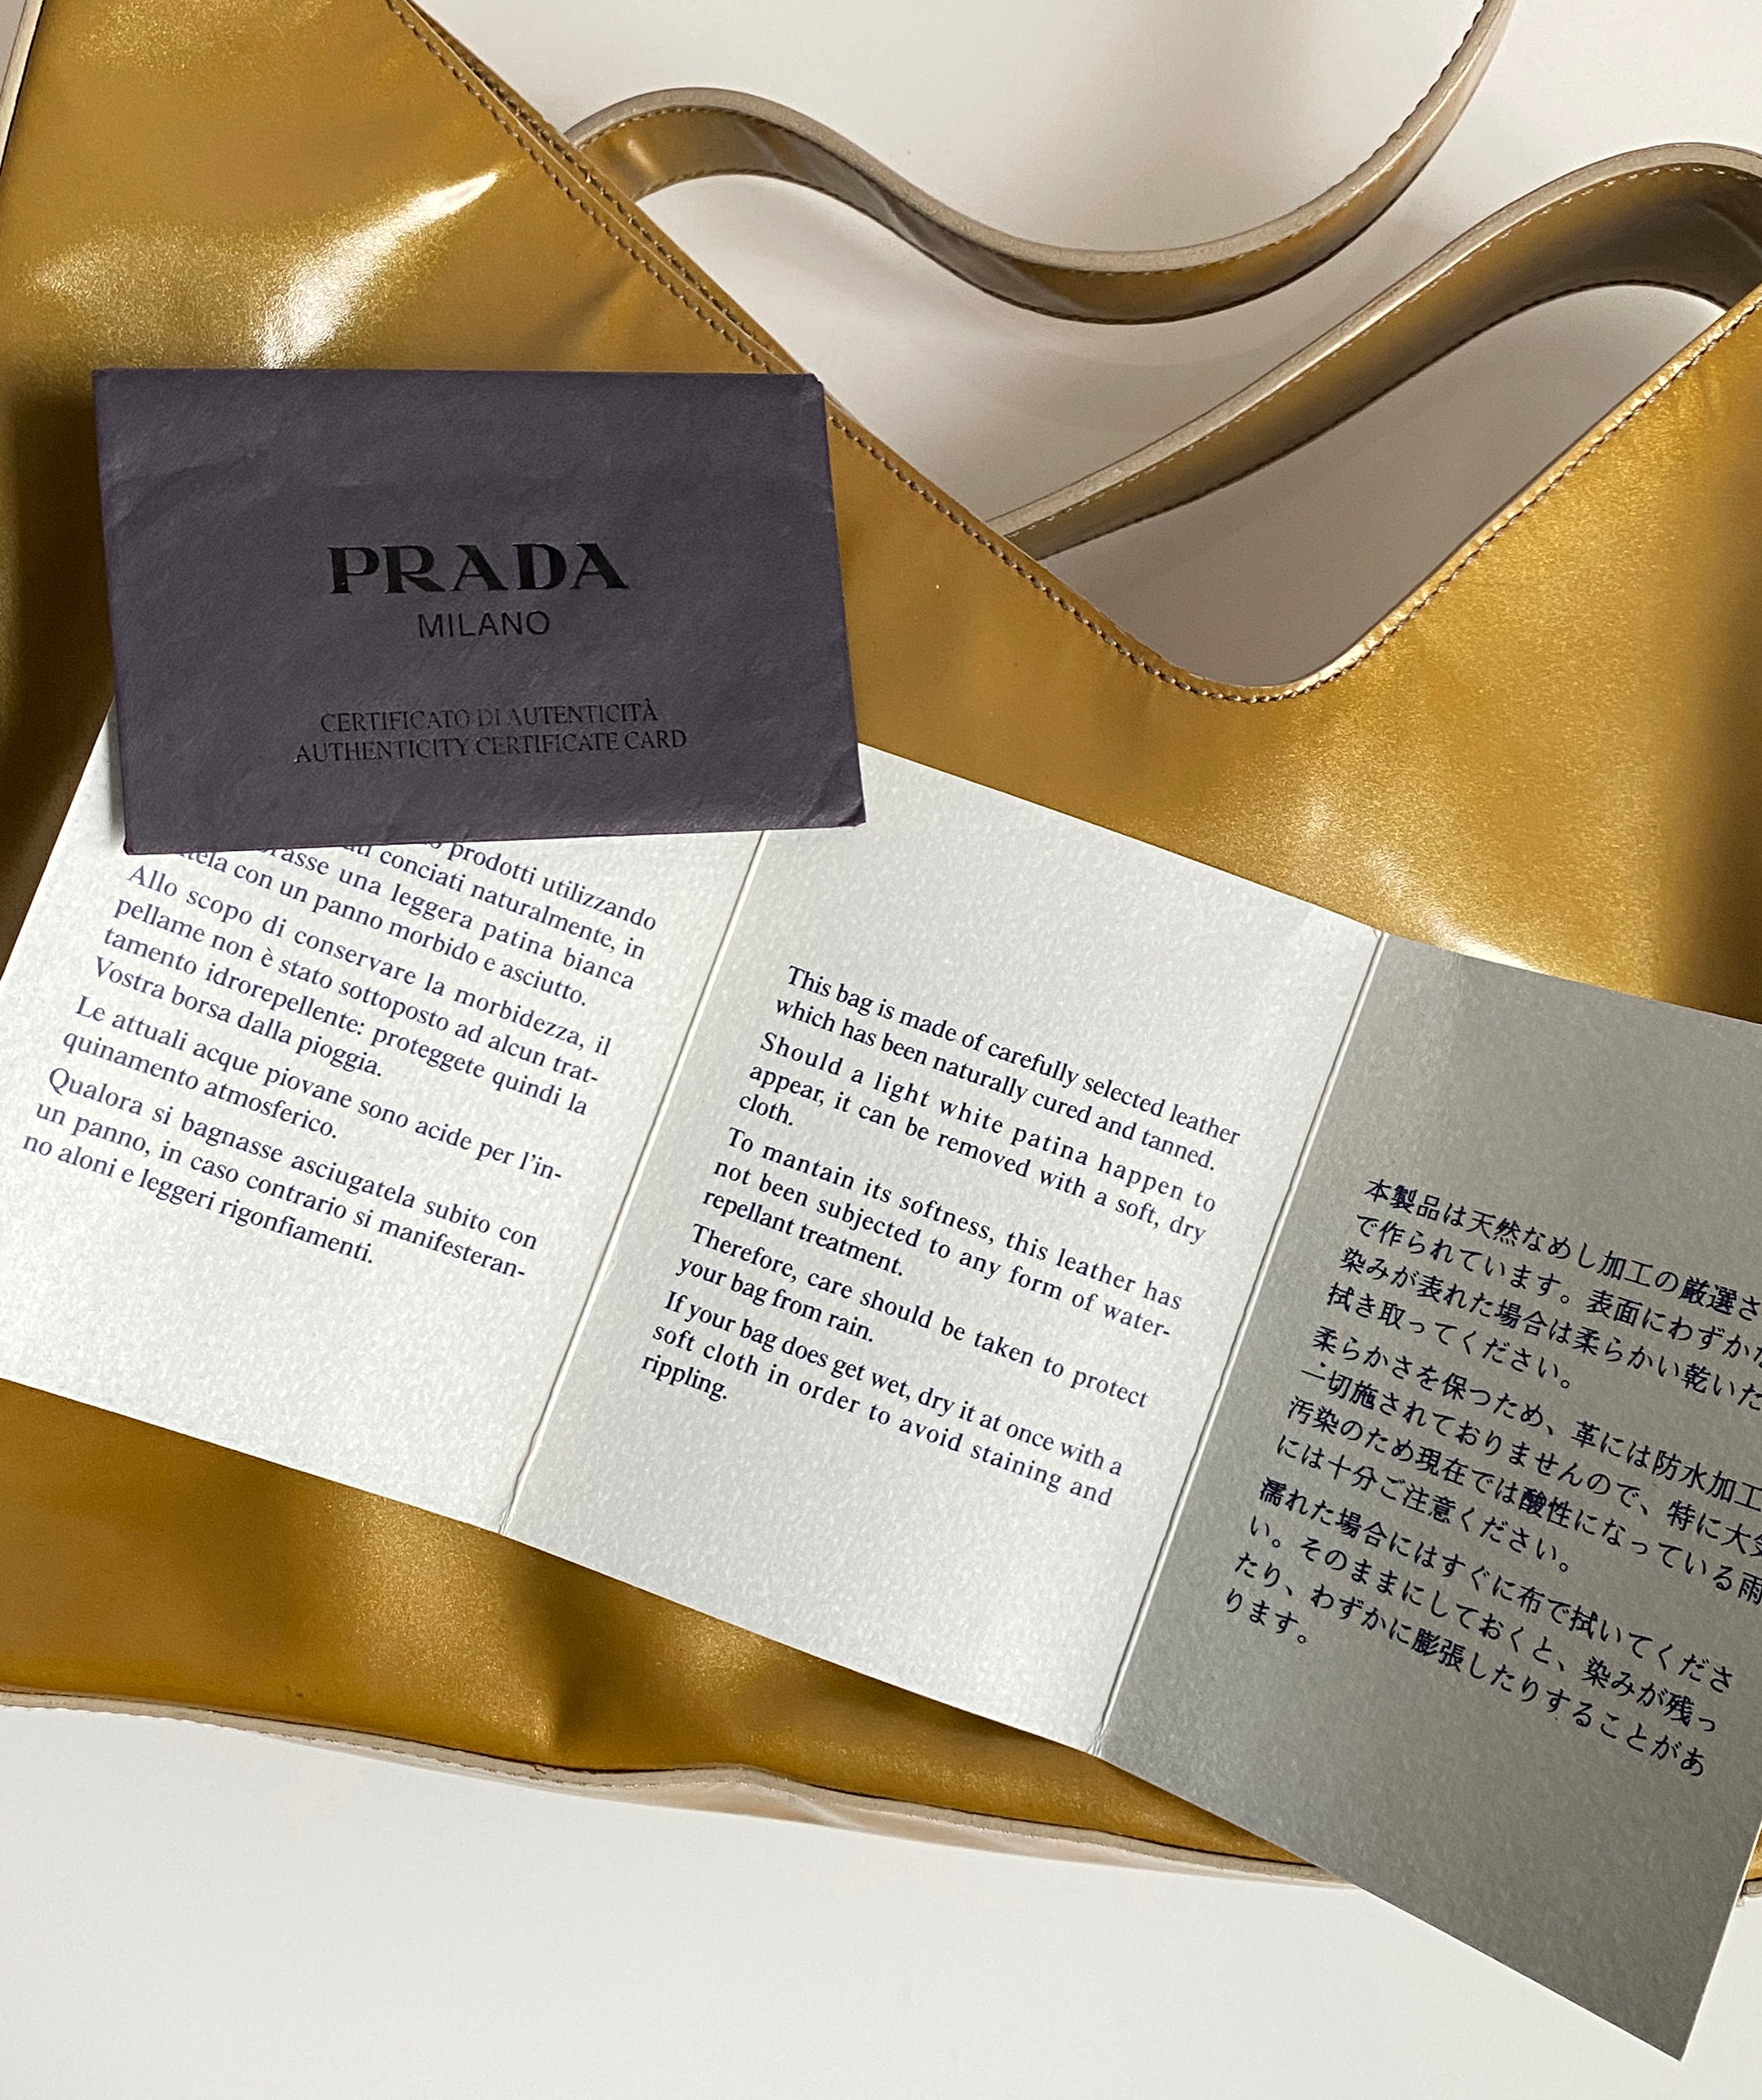 Prada authenticity card questions